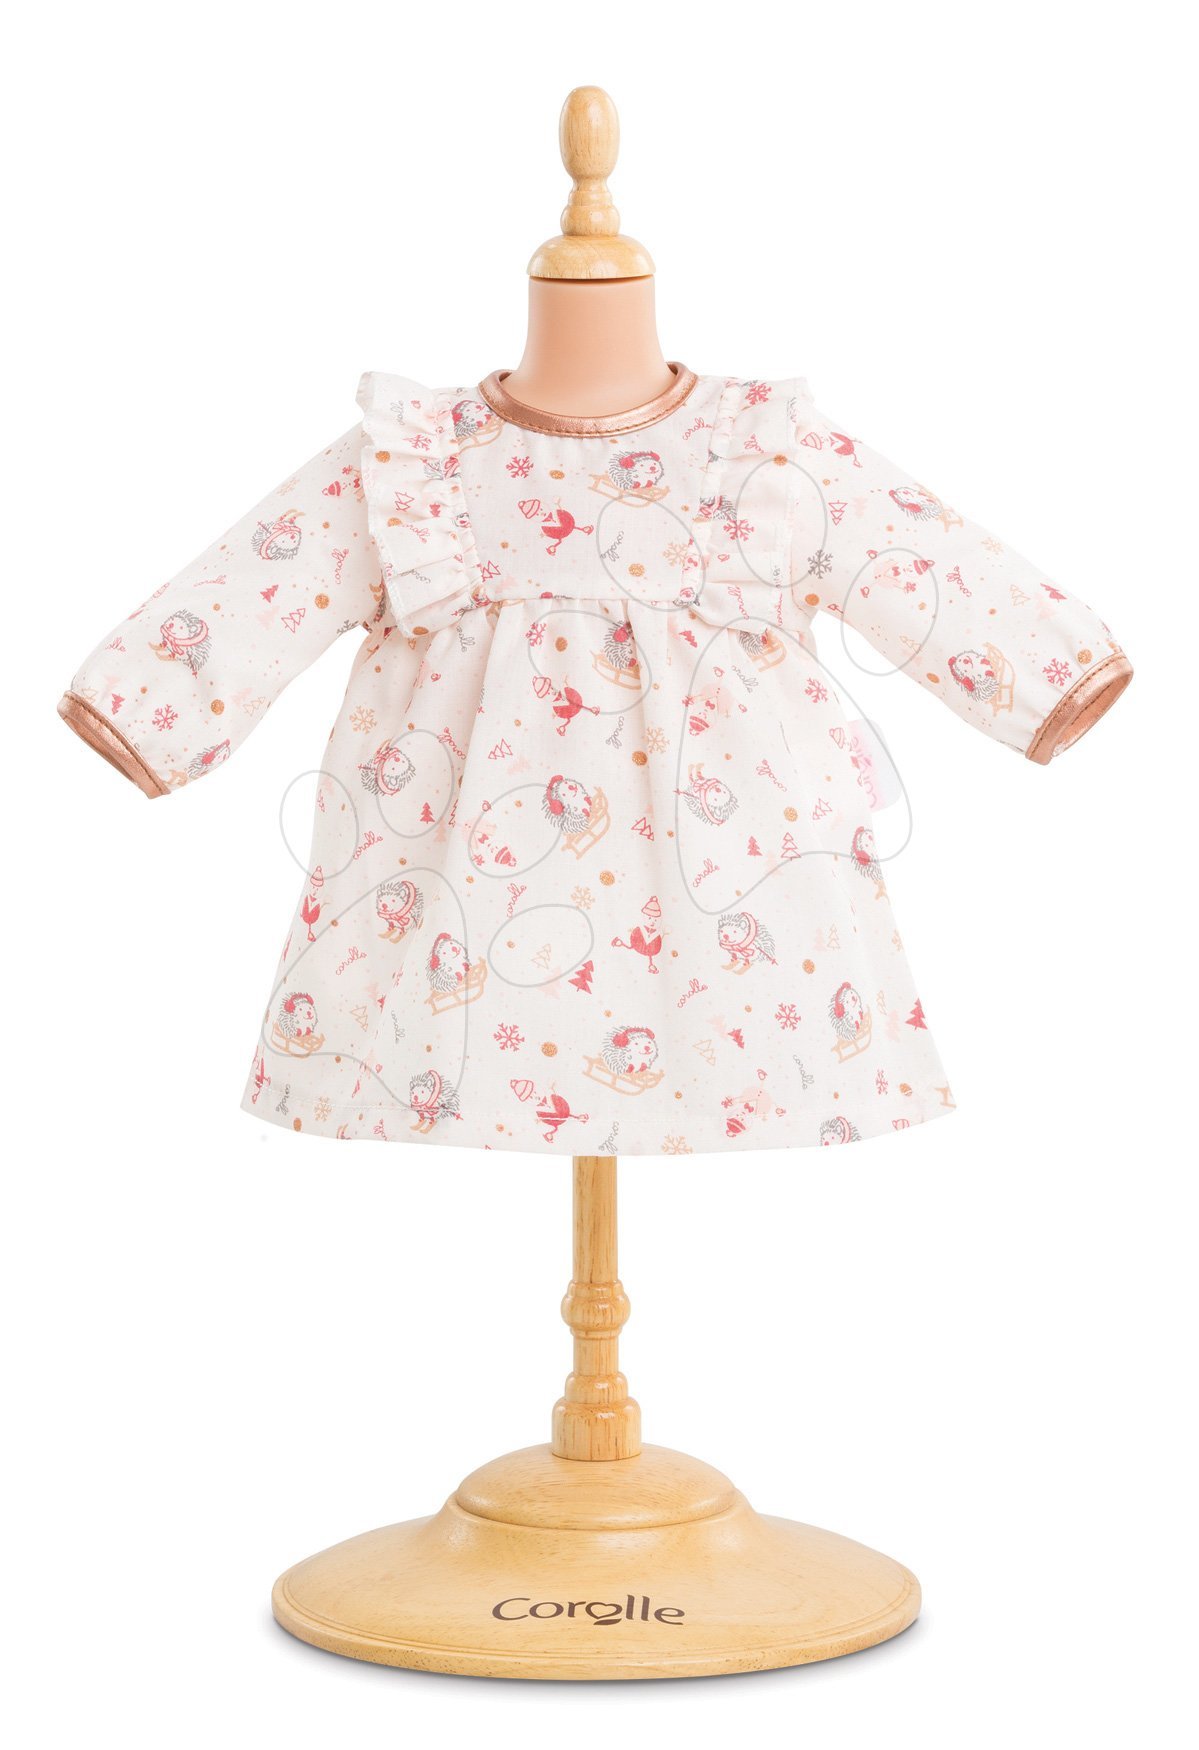 Oblečenie Dress-Enchanted Winter Bébé Corolle pre 30 cm bábiku od 18 mes